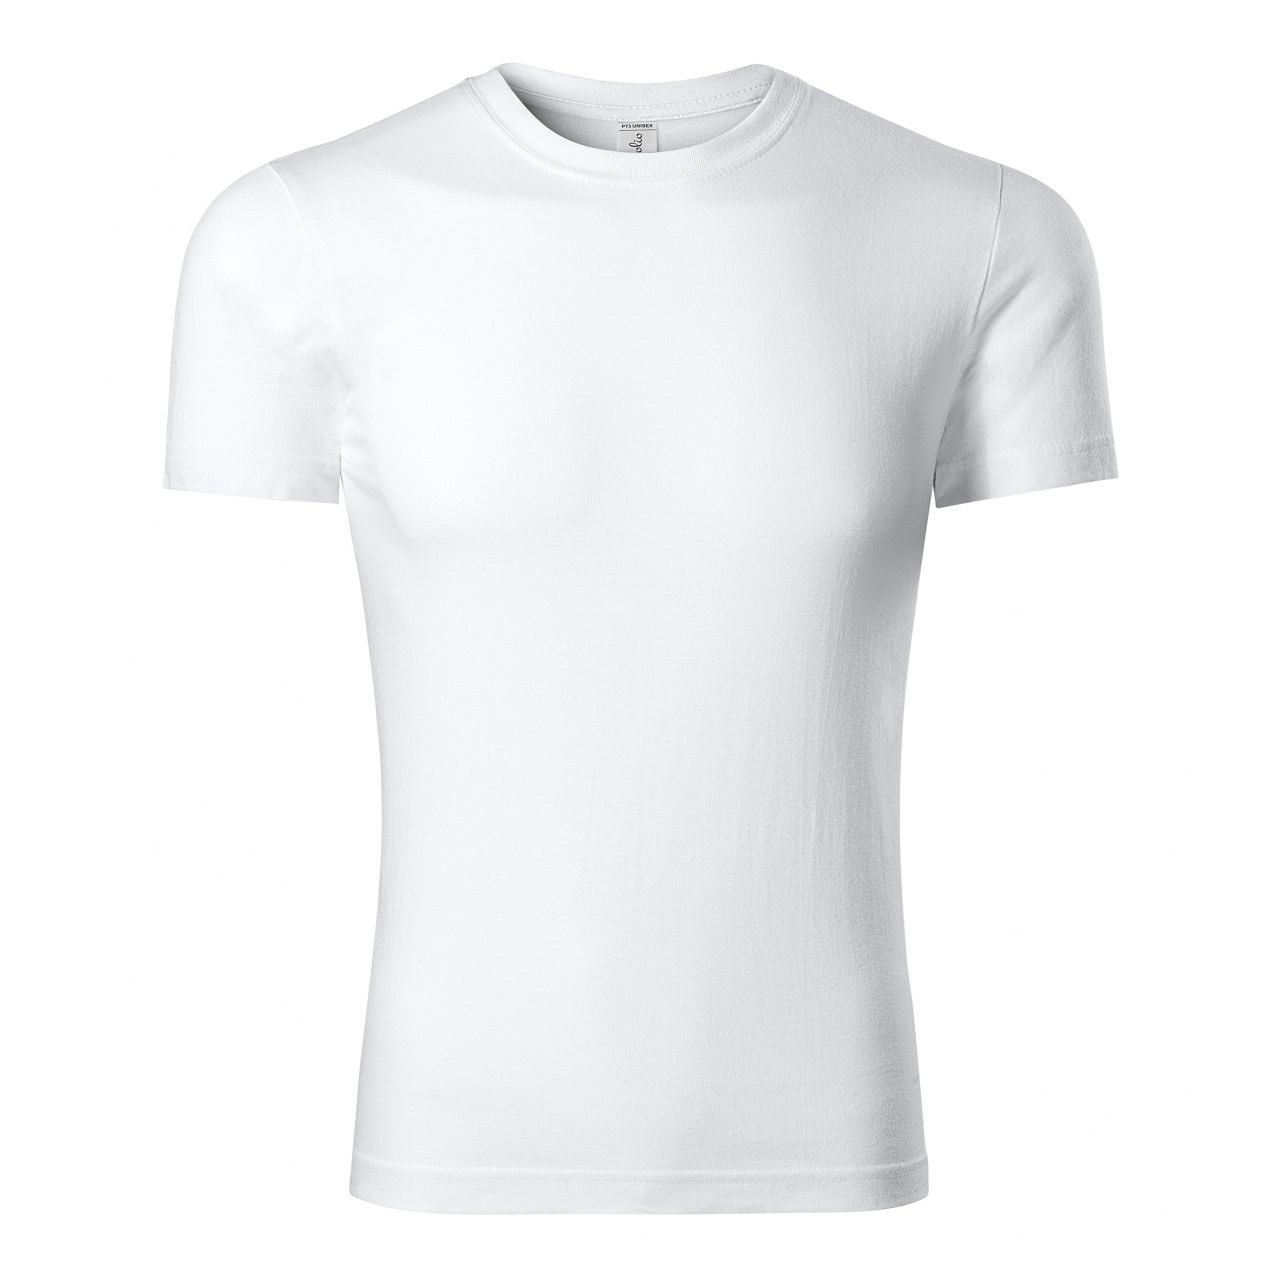 Tričko unisex Piccolio Paint - bílé, XL